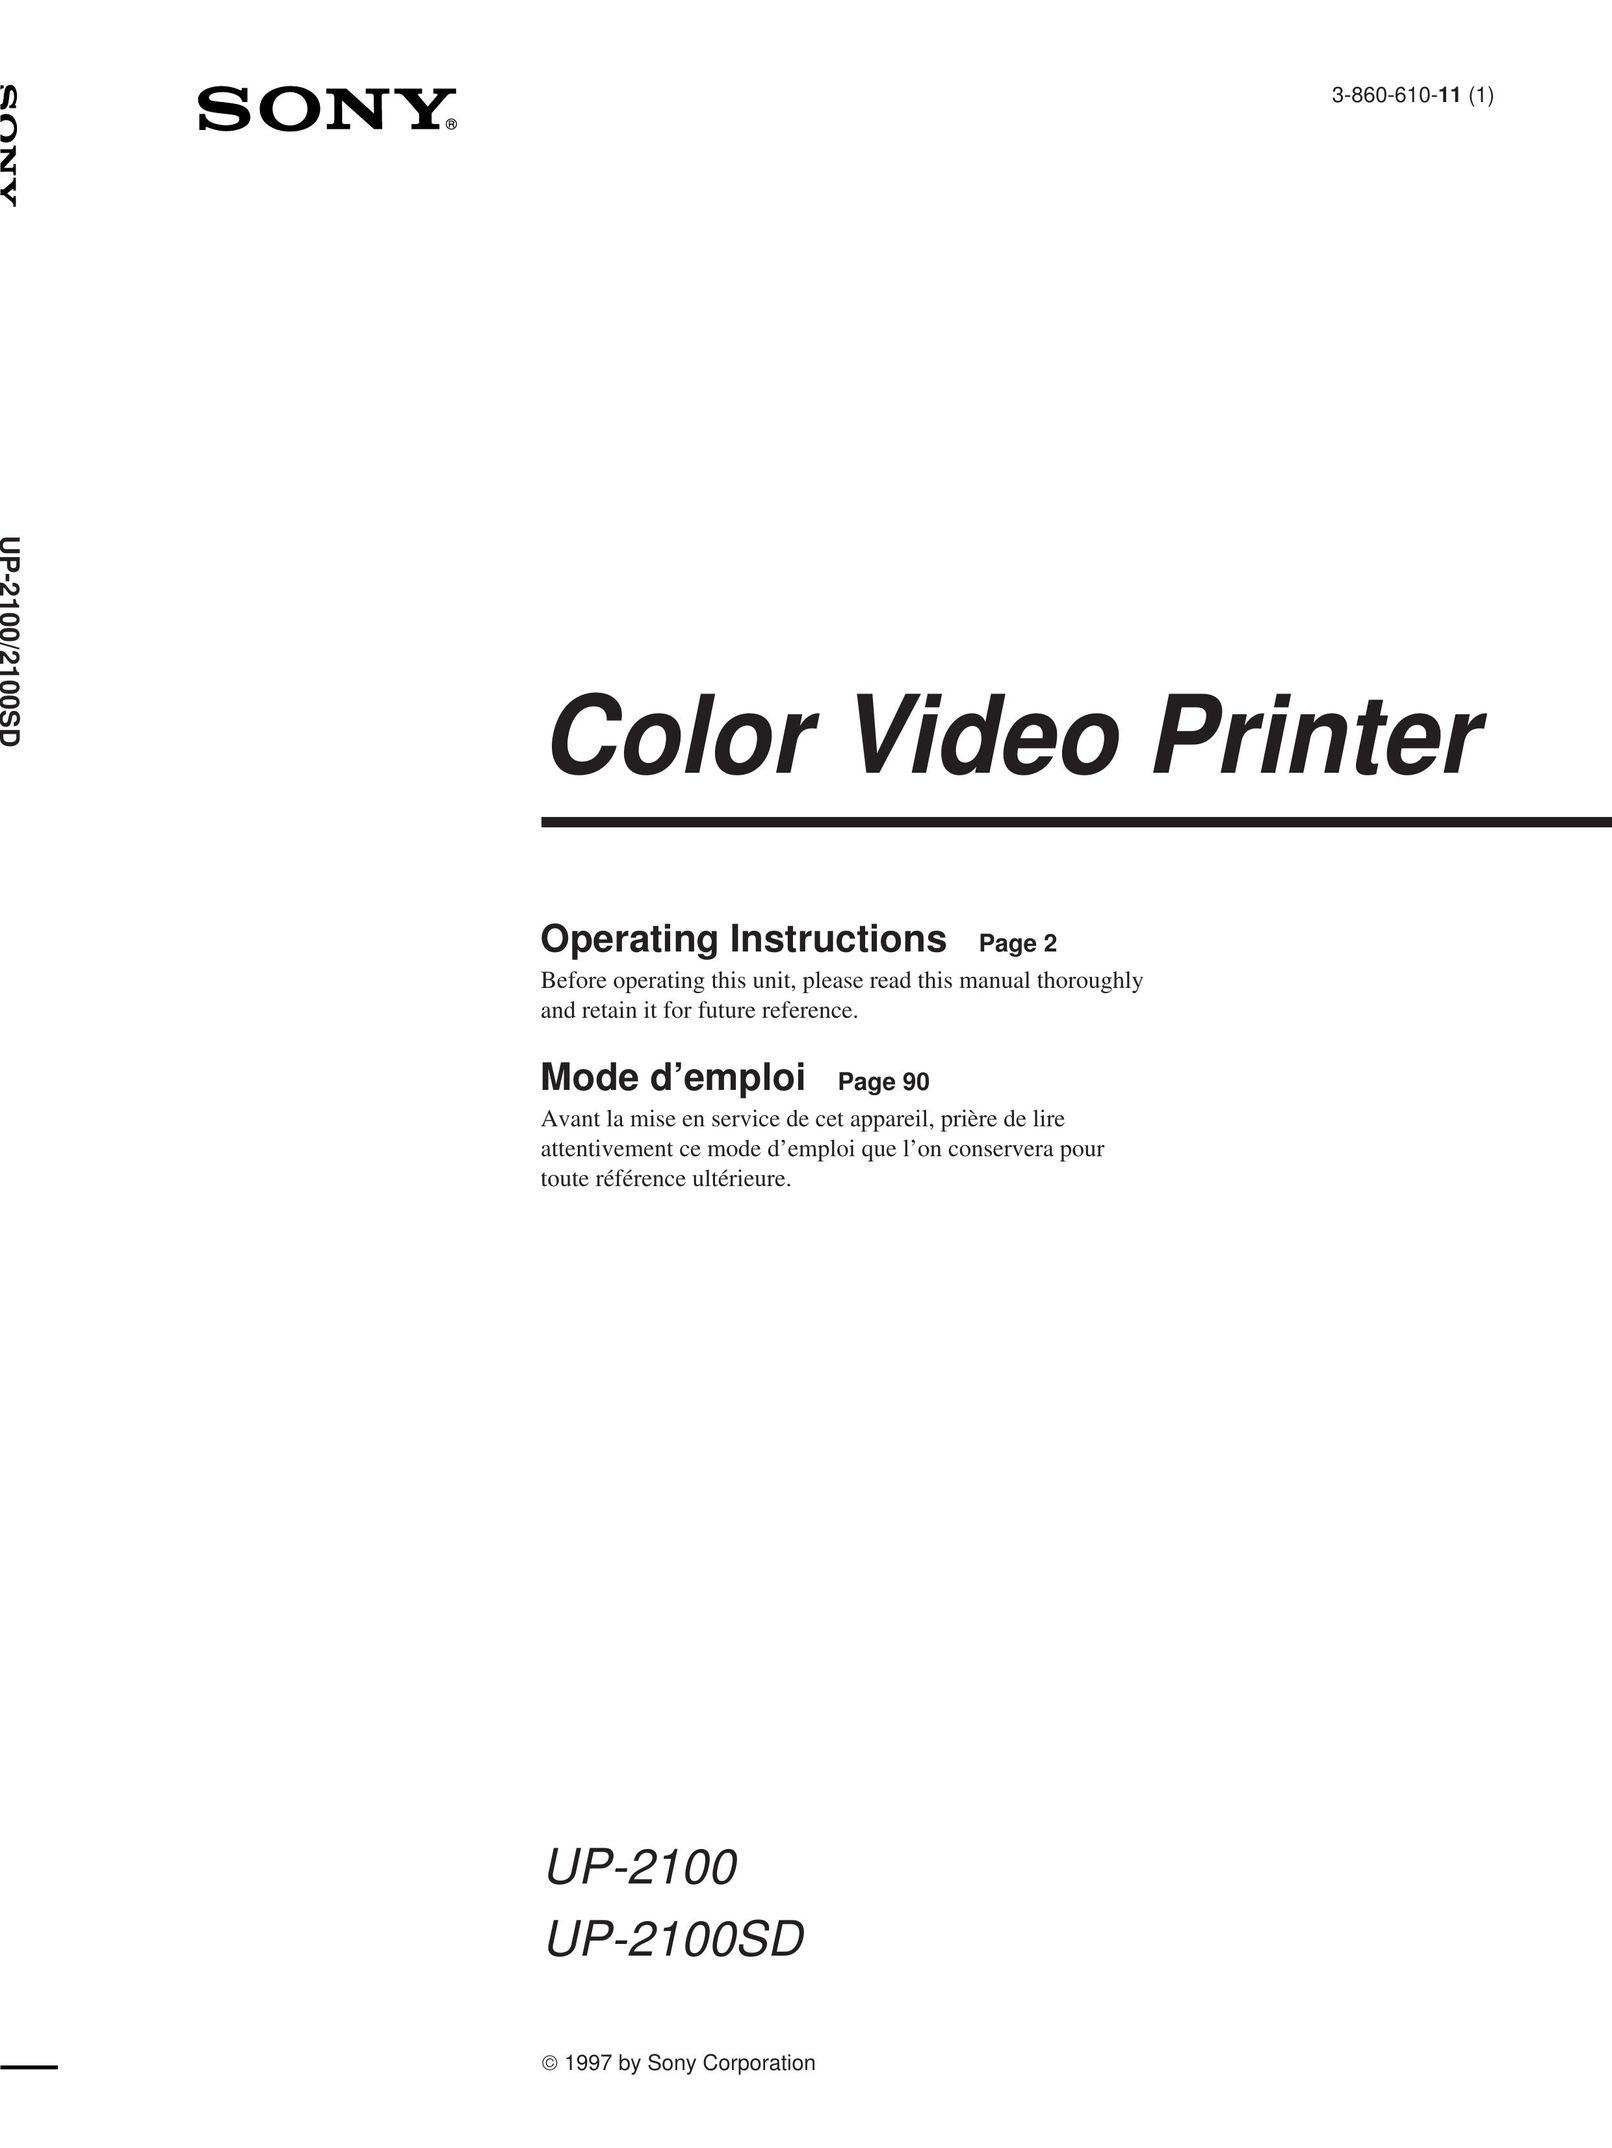 Sony UP-2100SD Printer User Manual